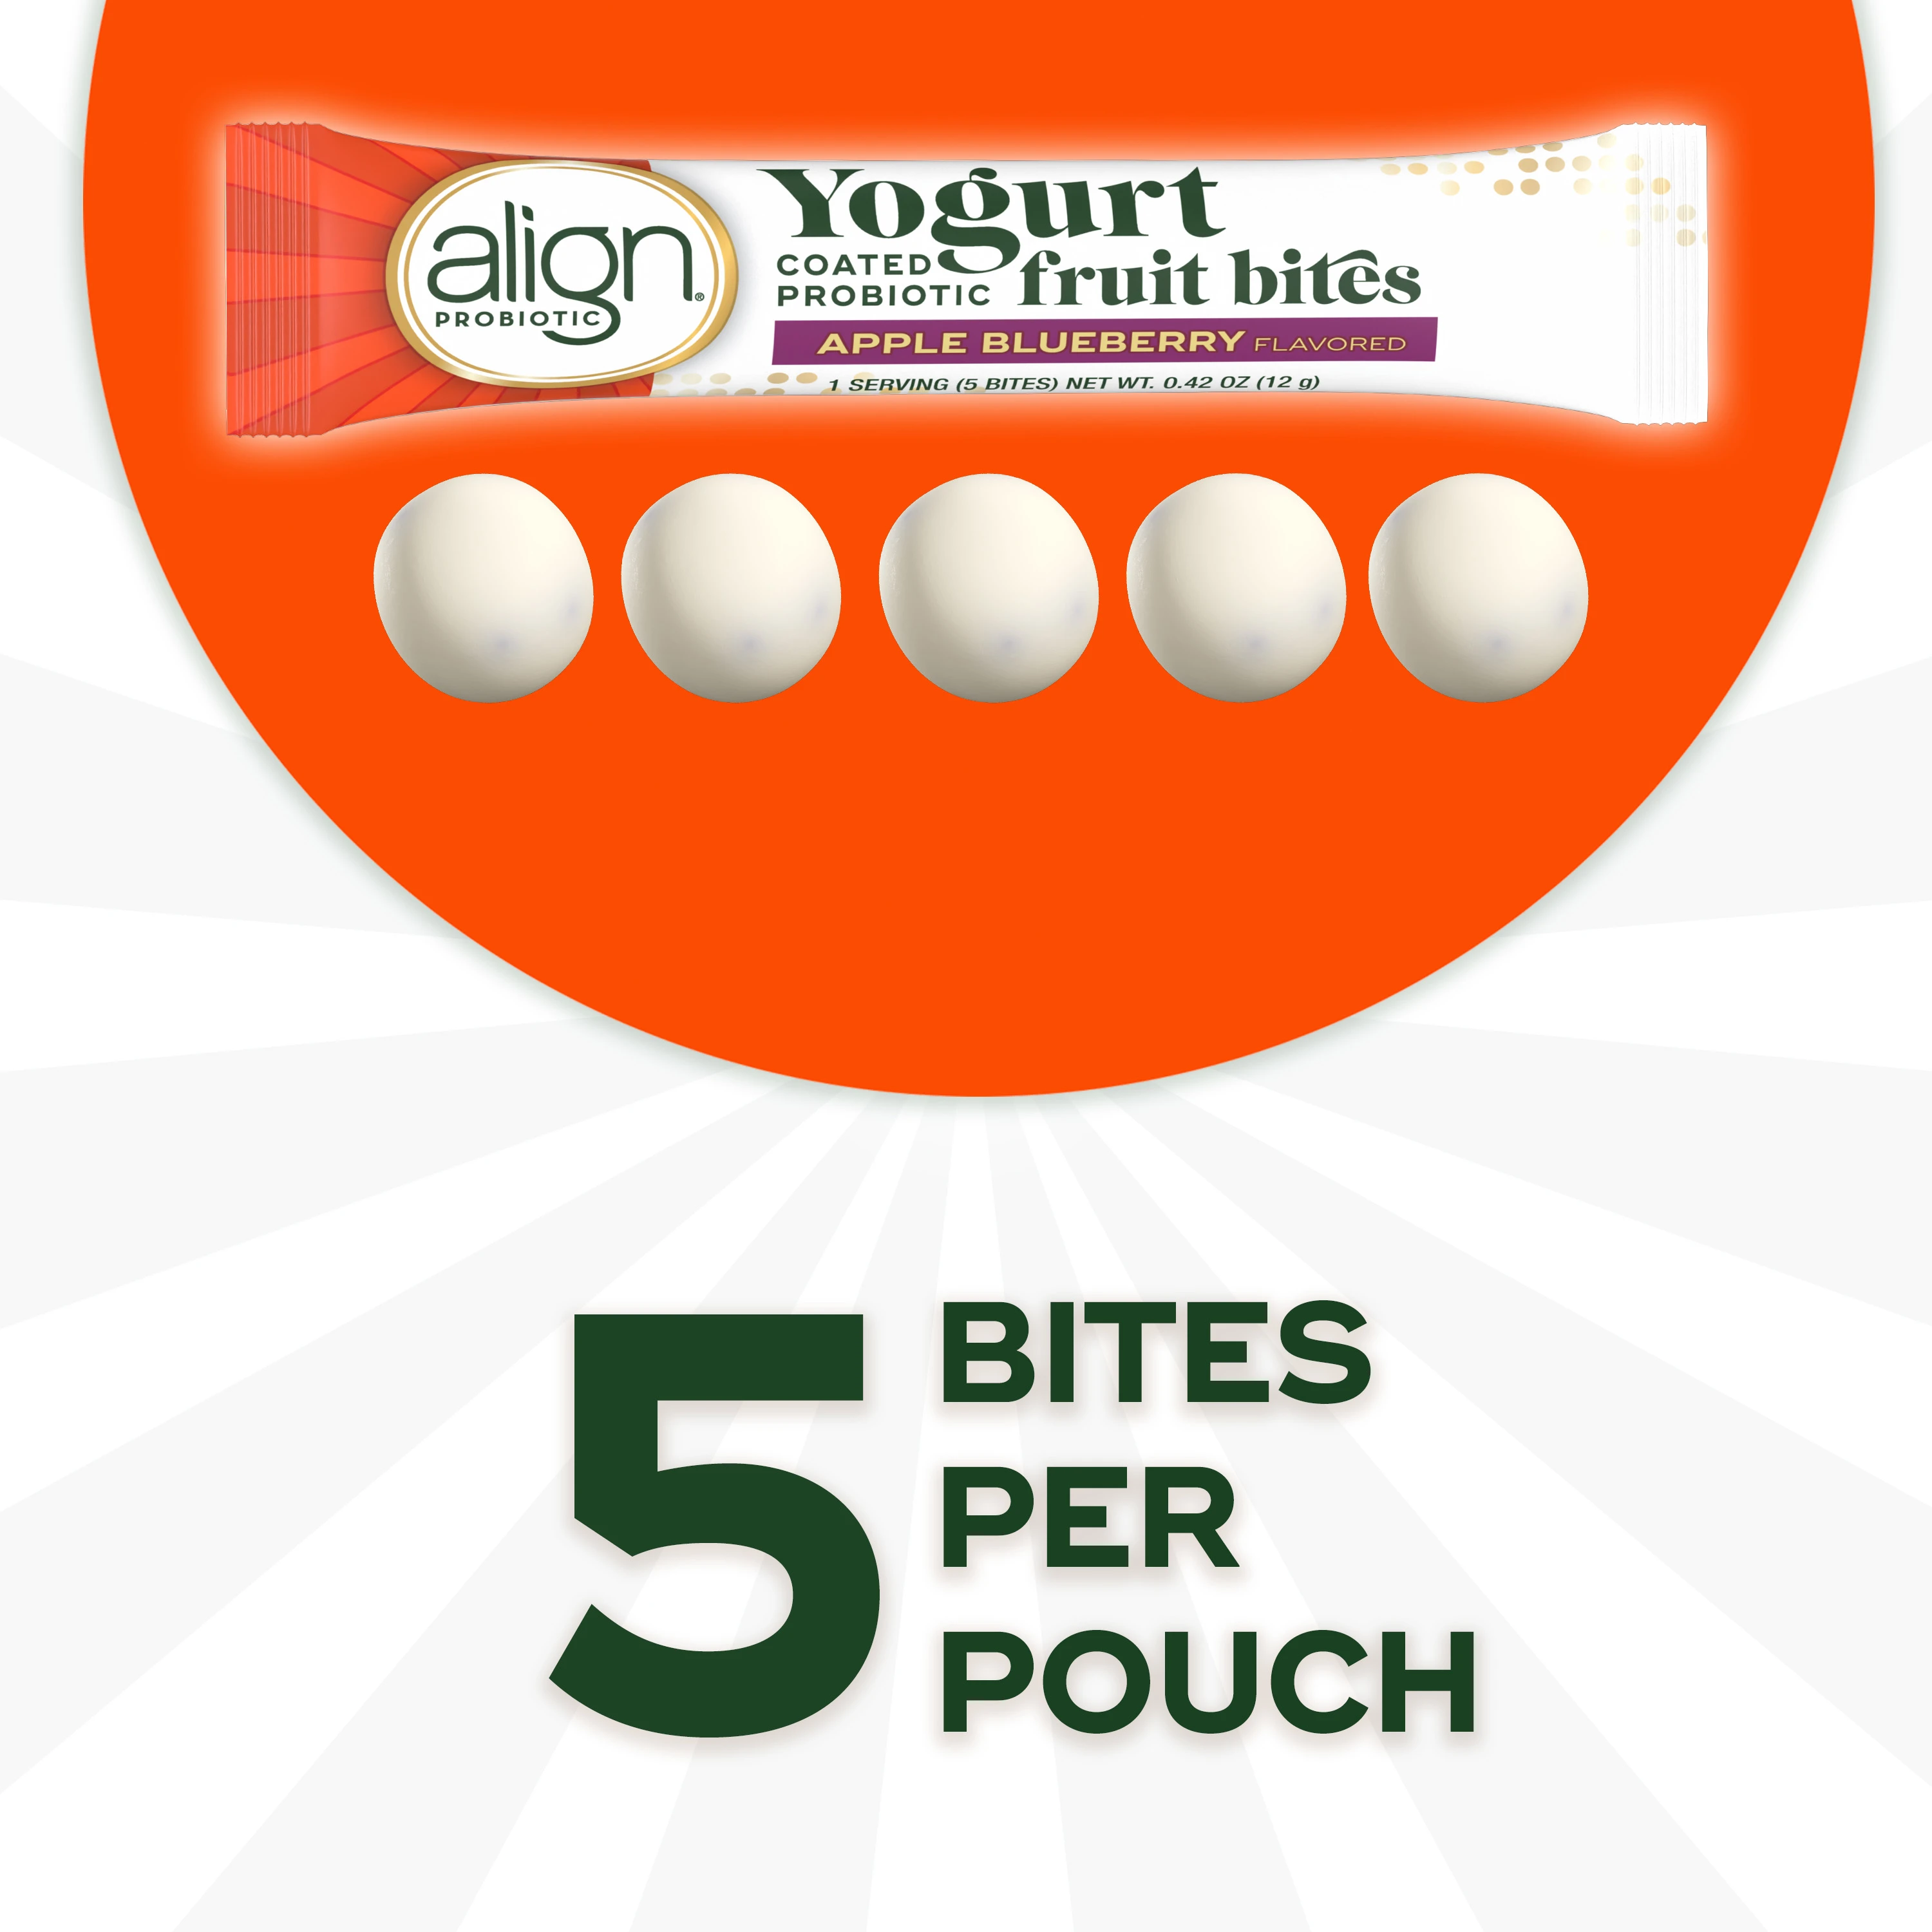 Align Yogurt Coated Probiotic Fruit Bites - bite count